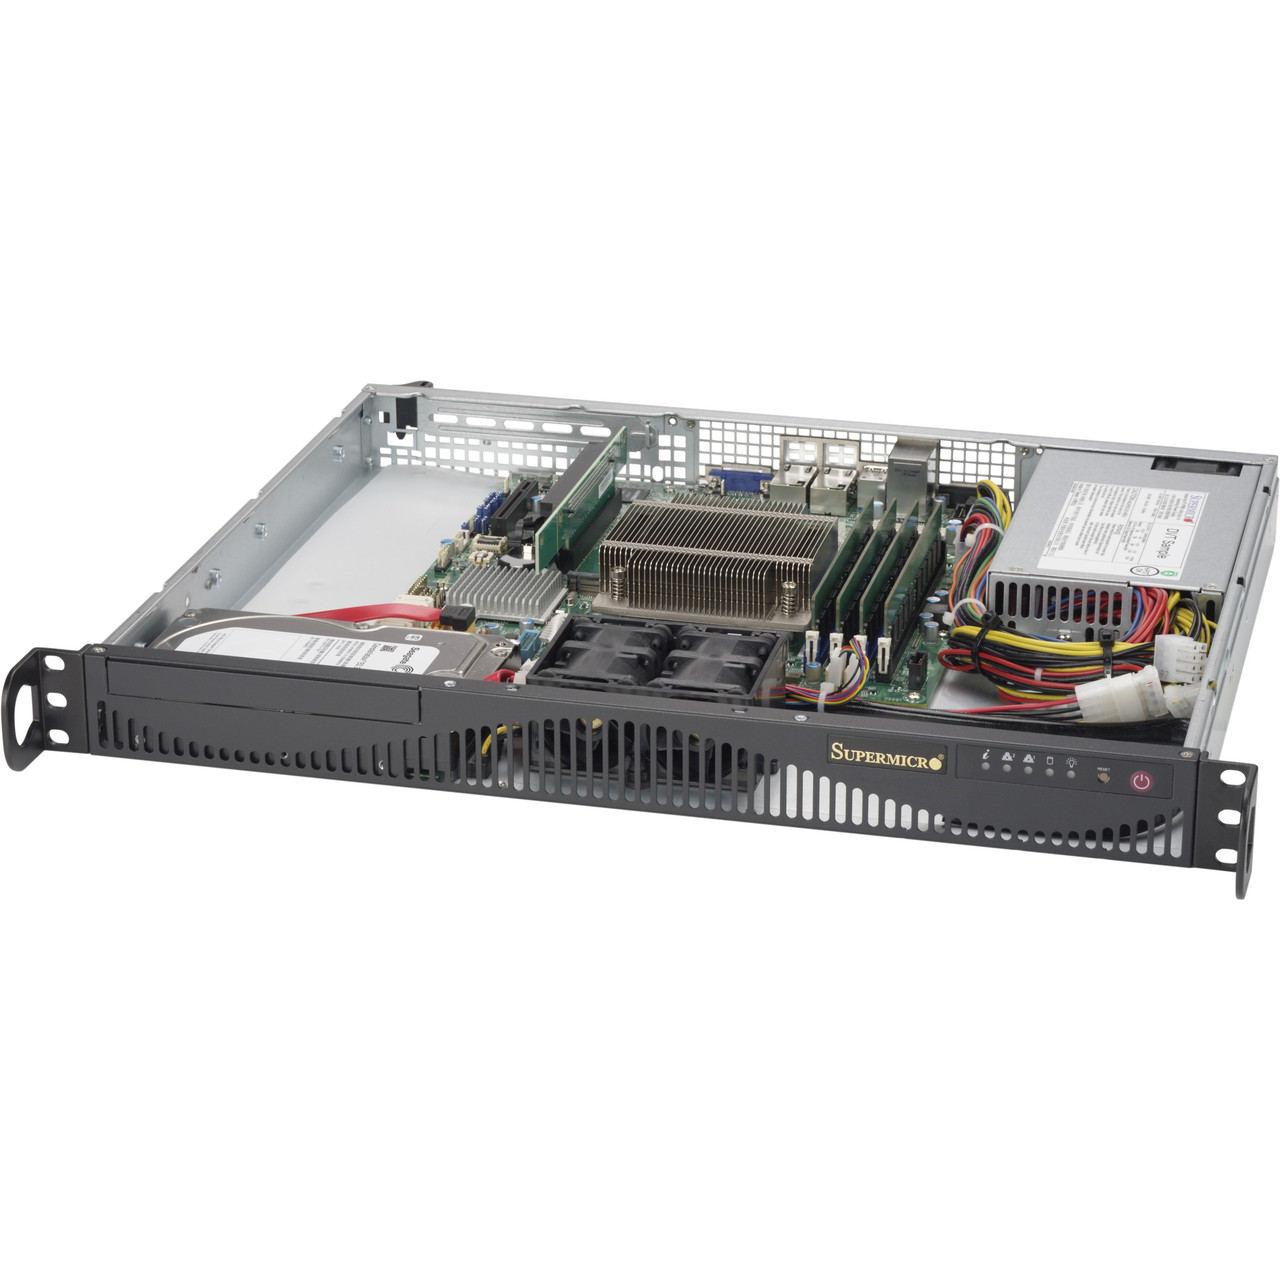 SuperMicro SuperServer 5019S-ML Barebone System - 1U Rack-mountable - Socket H4 LGA-1151 - 1 x Processor Support - SYS-5019S-ML